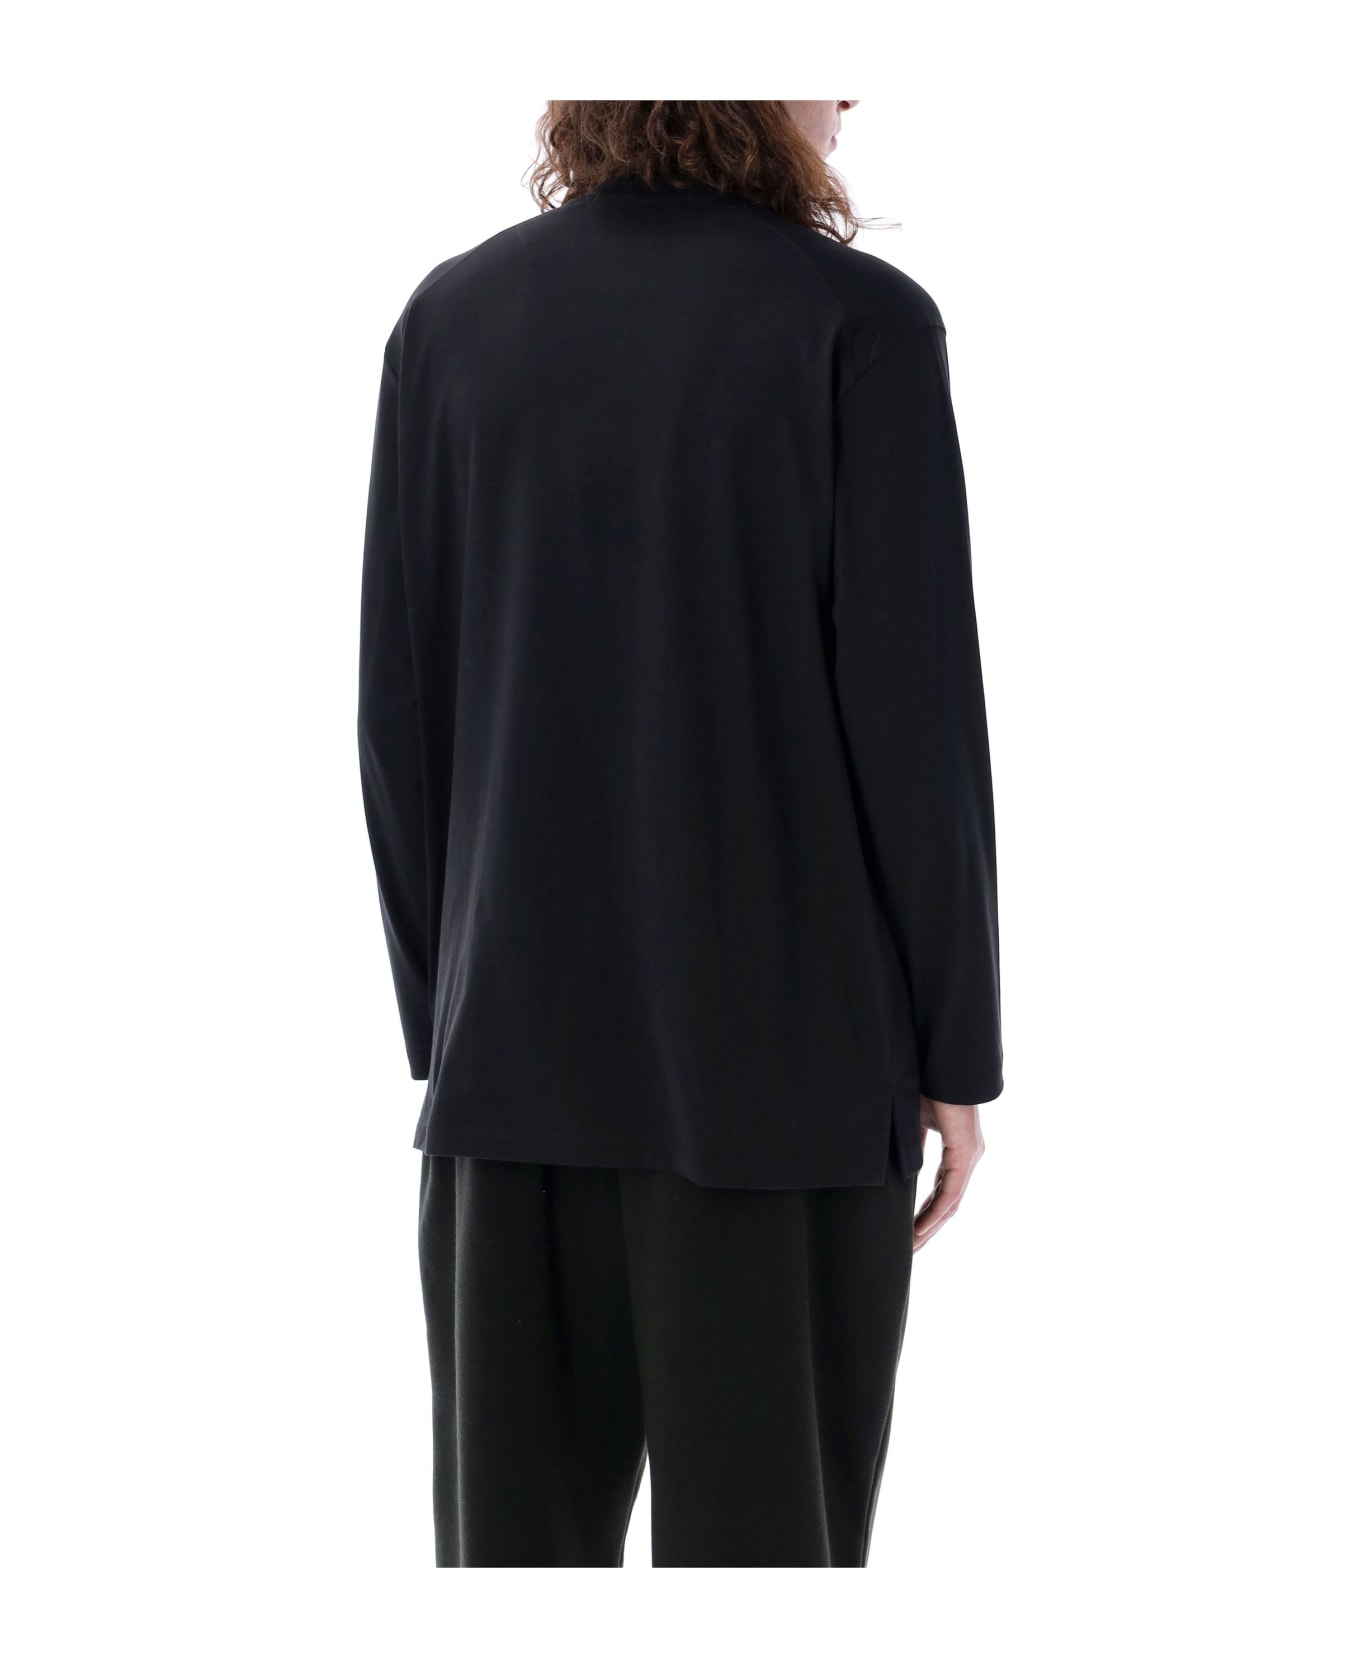 Y-3 Graphic Long Sleeves Tee - BLACK Tシャツ